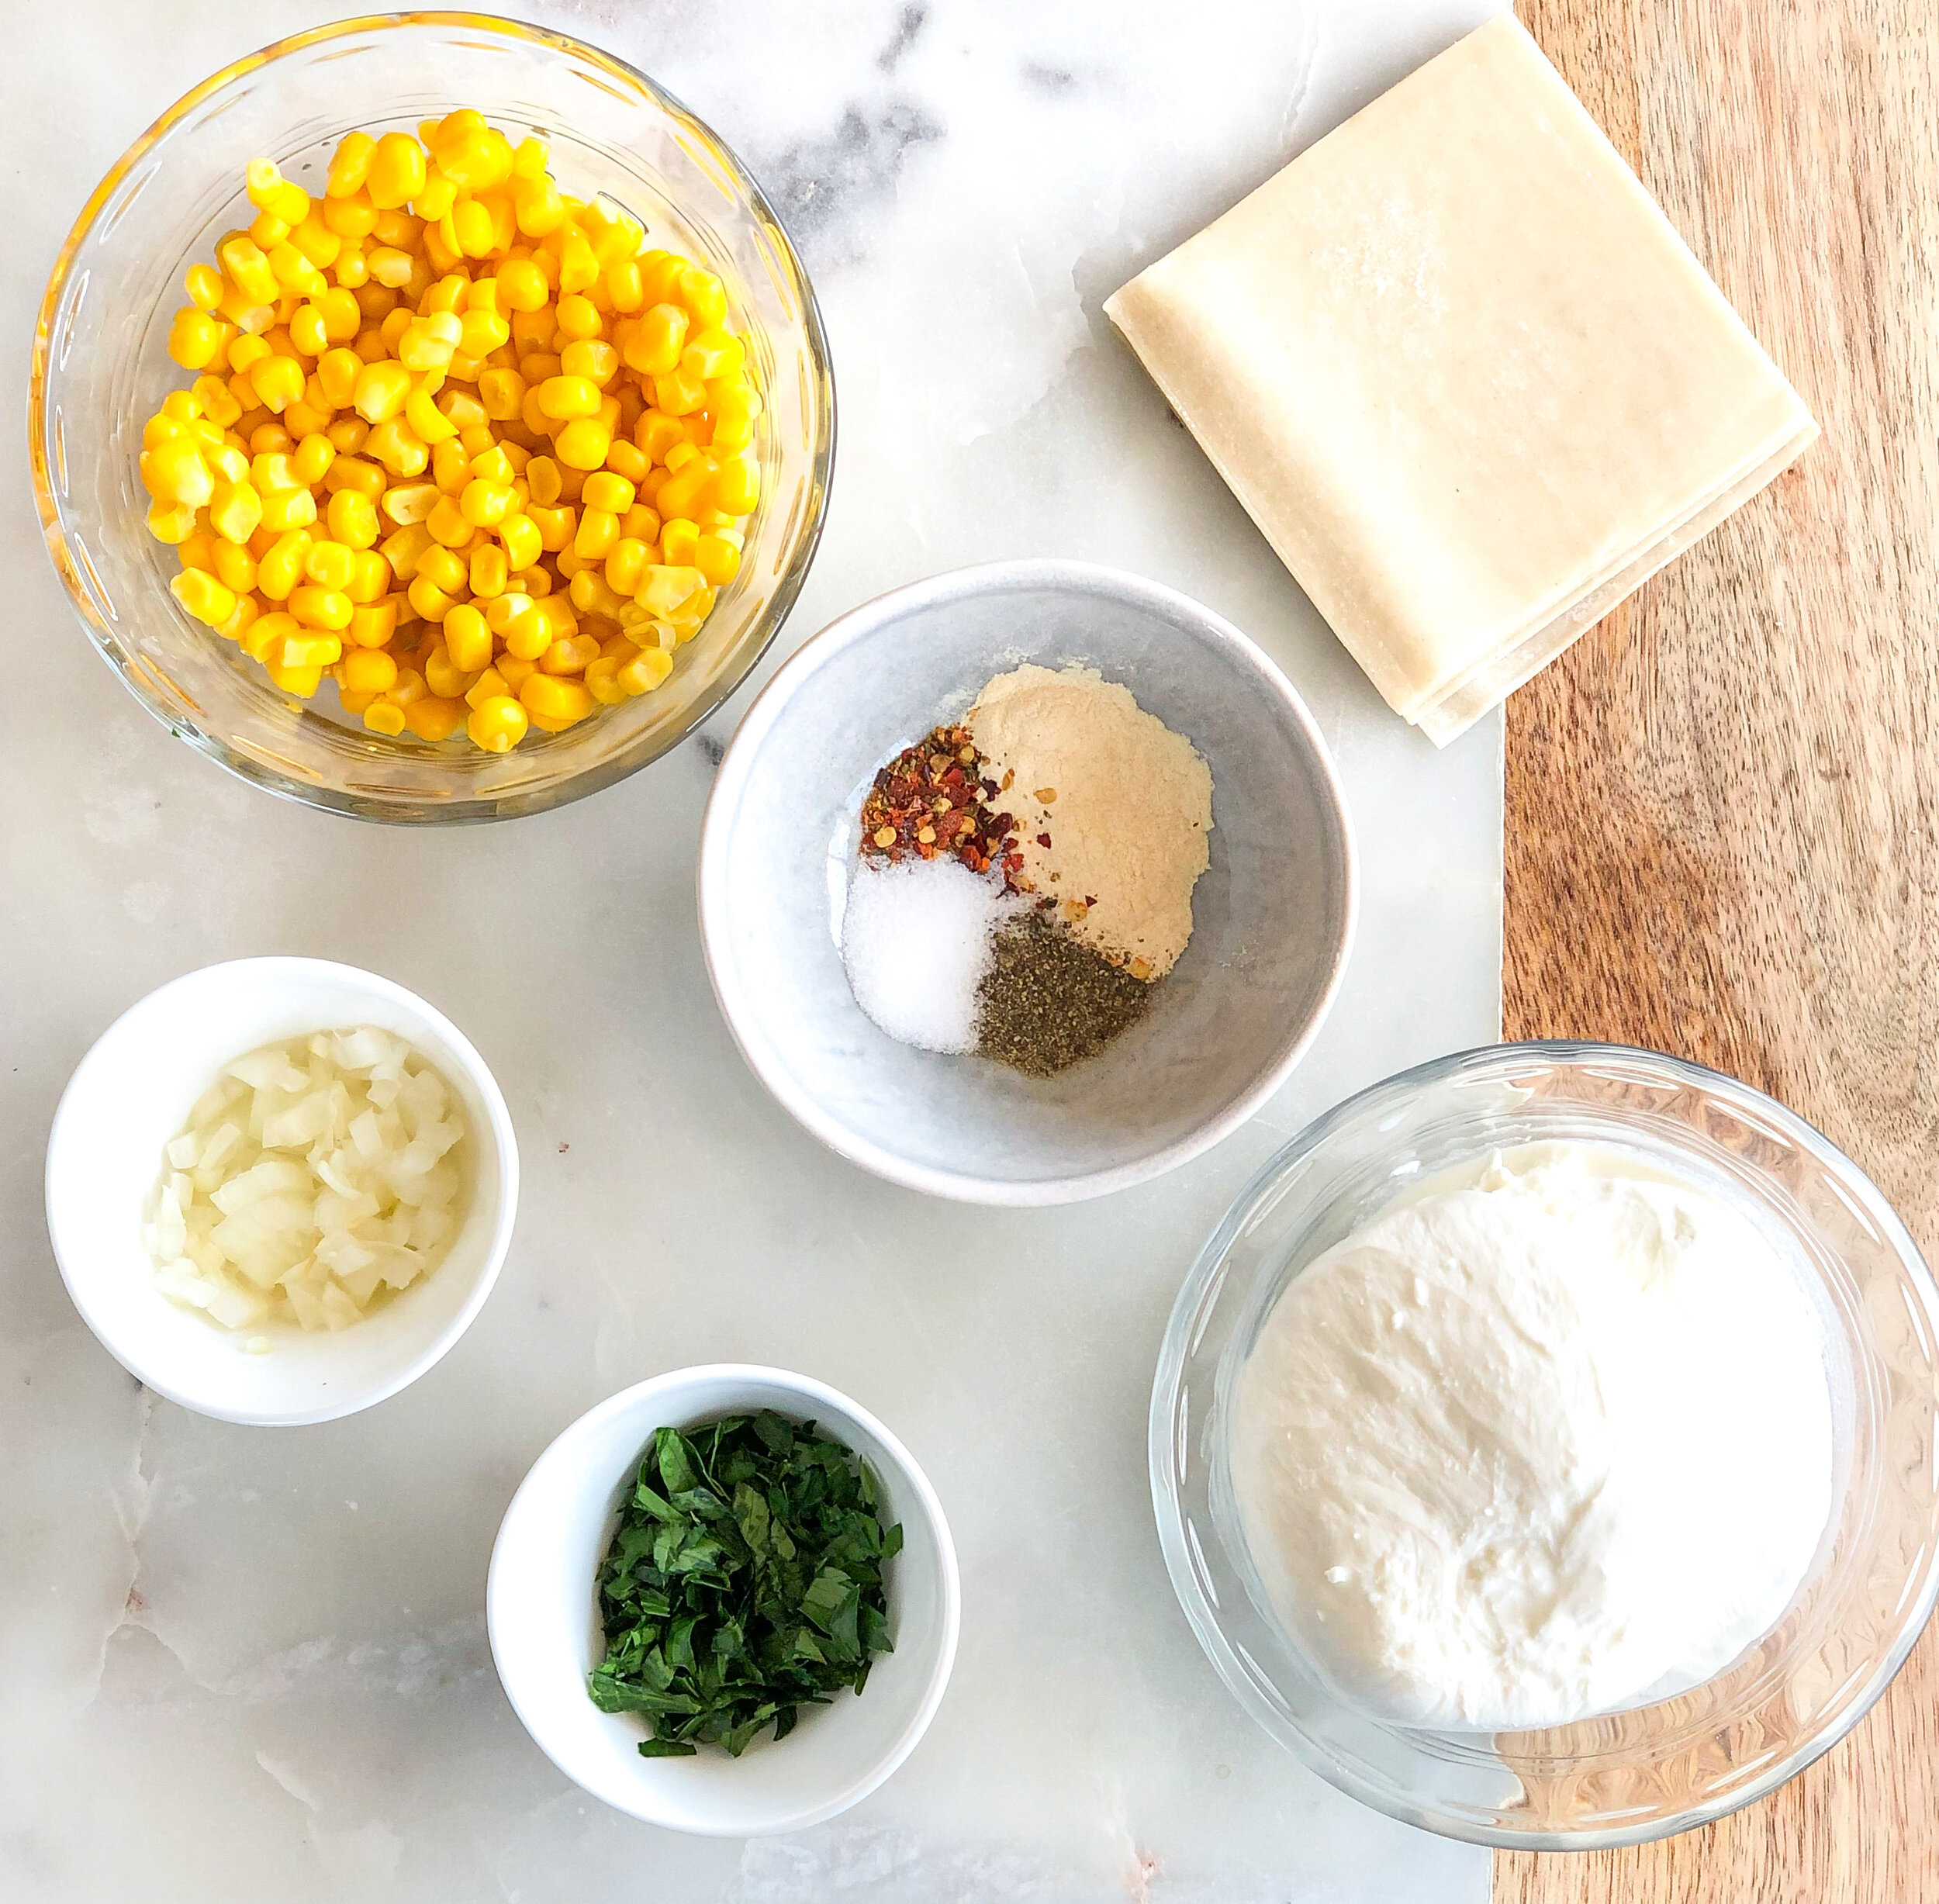 Burrata Ravioli Recipe: How to Make It